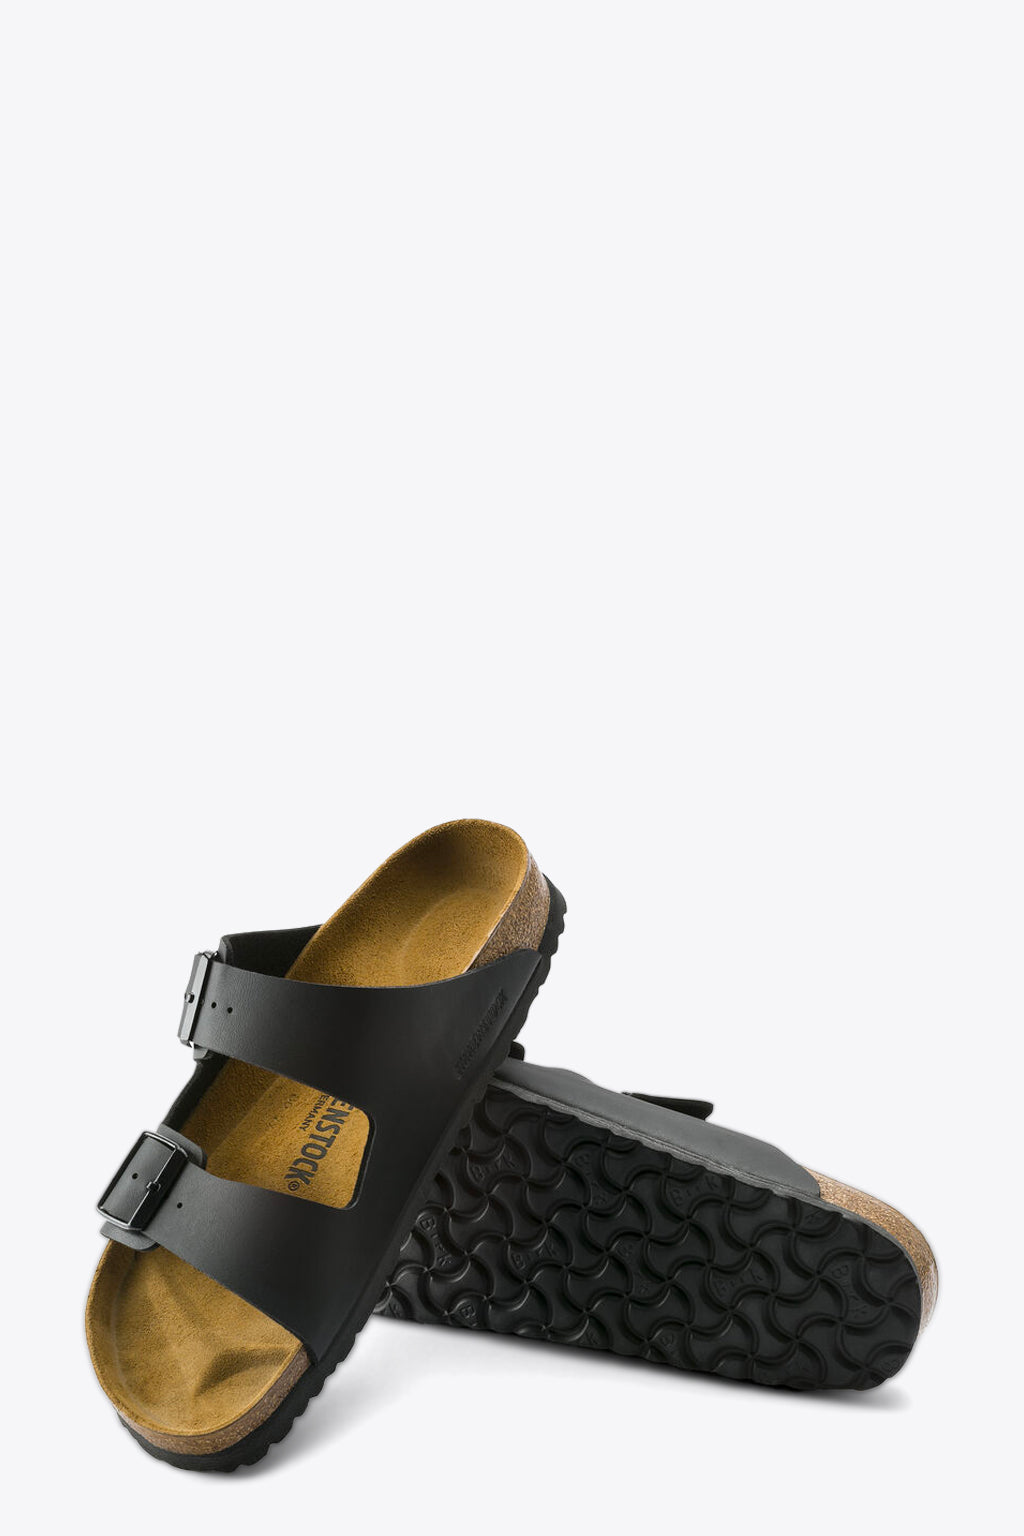 alt-image__Black-eco-leather-sandal-with-buckles---Arizona